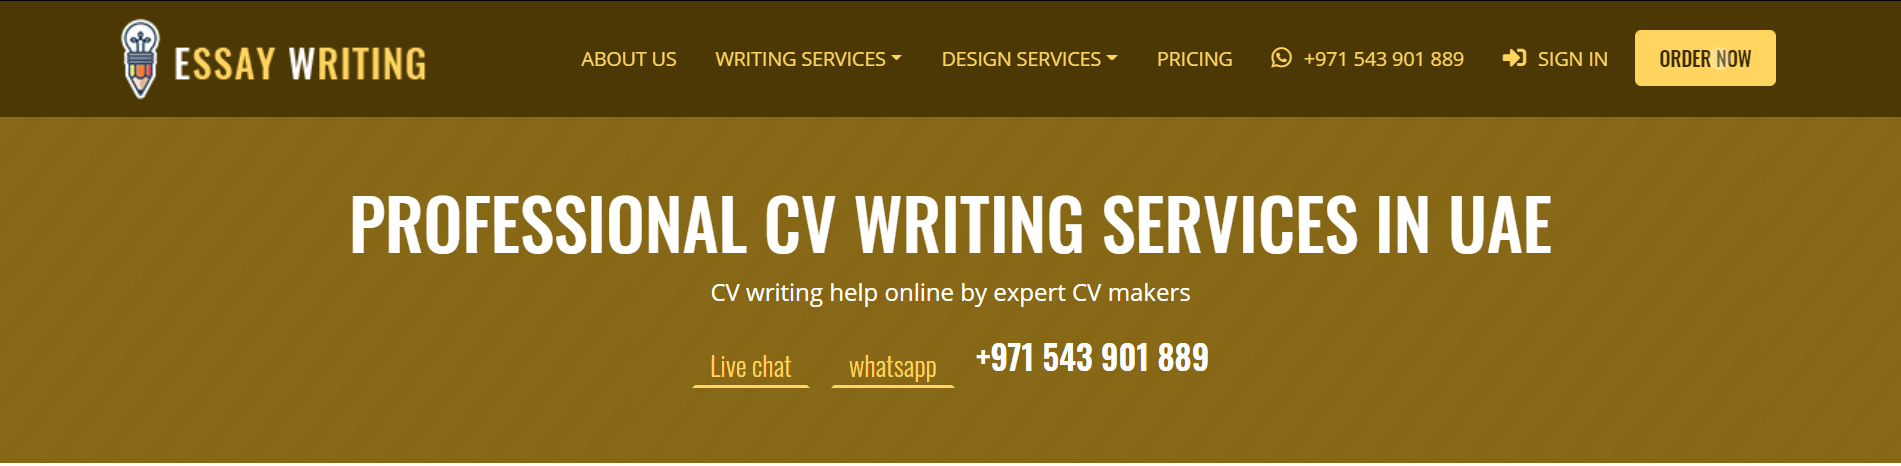 professional cv writing services dubai